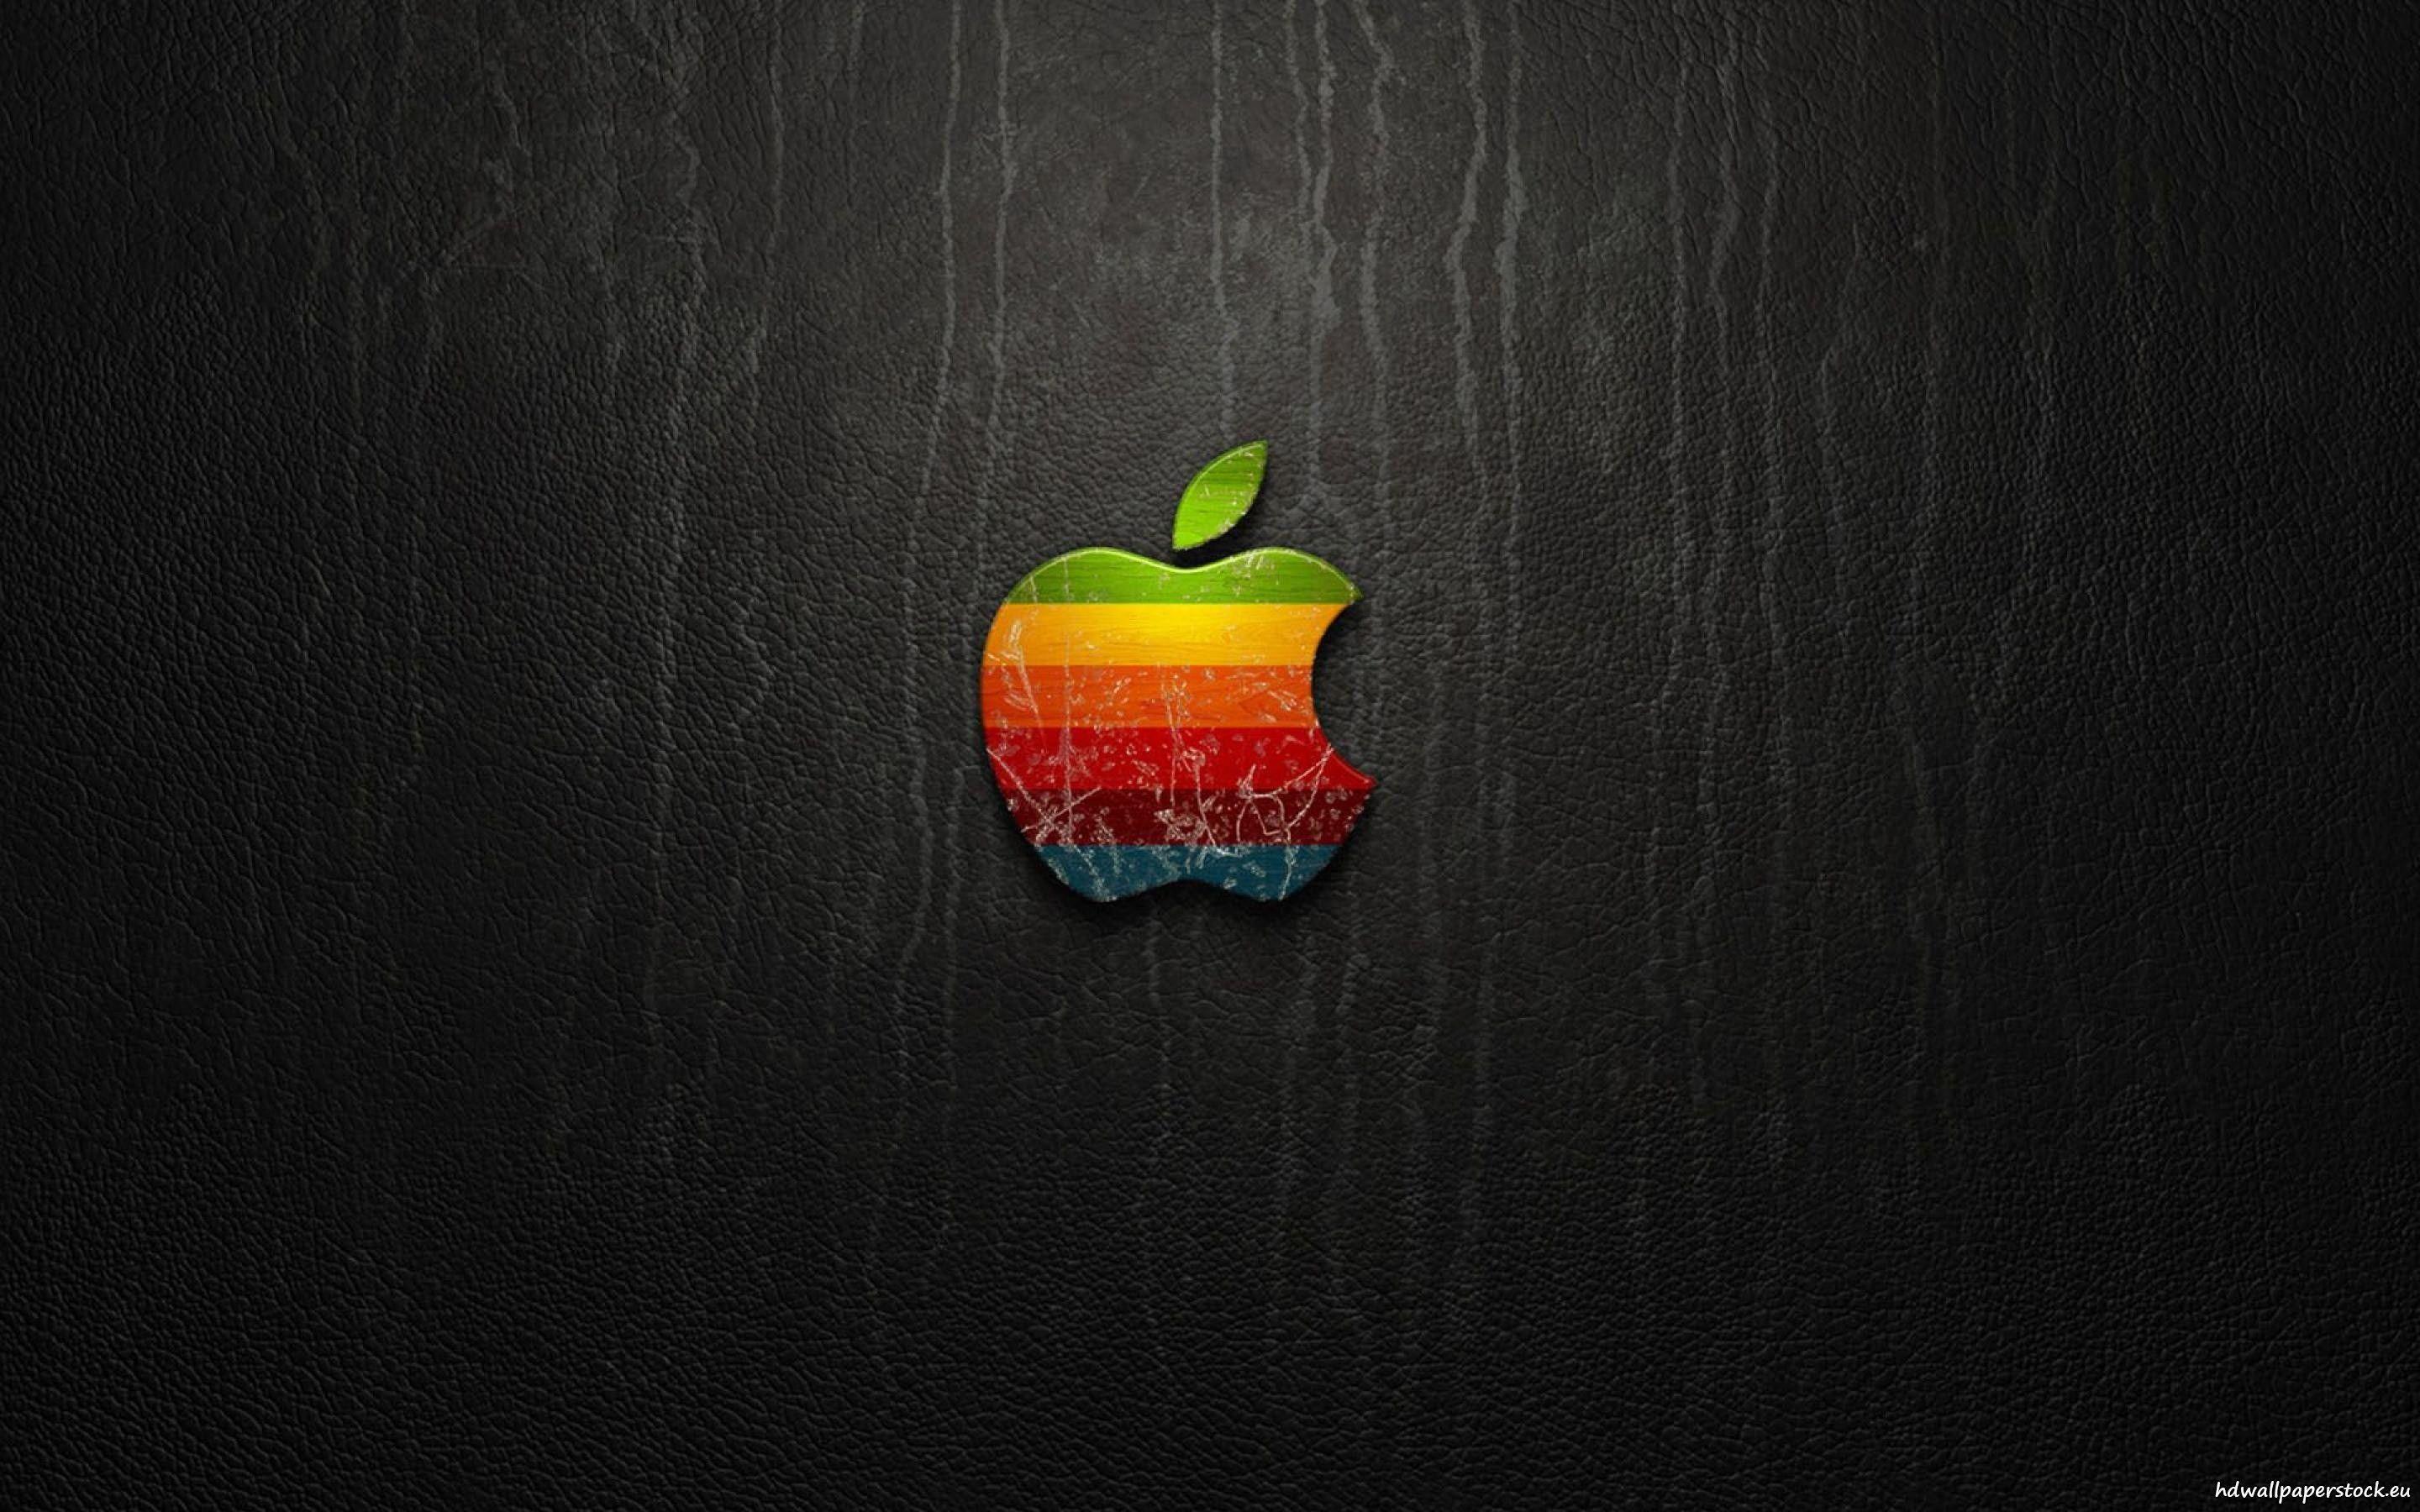 Silver Neon Apple Logo - Apple Logo HD Wallpapers - Wallpaper Cave